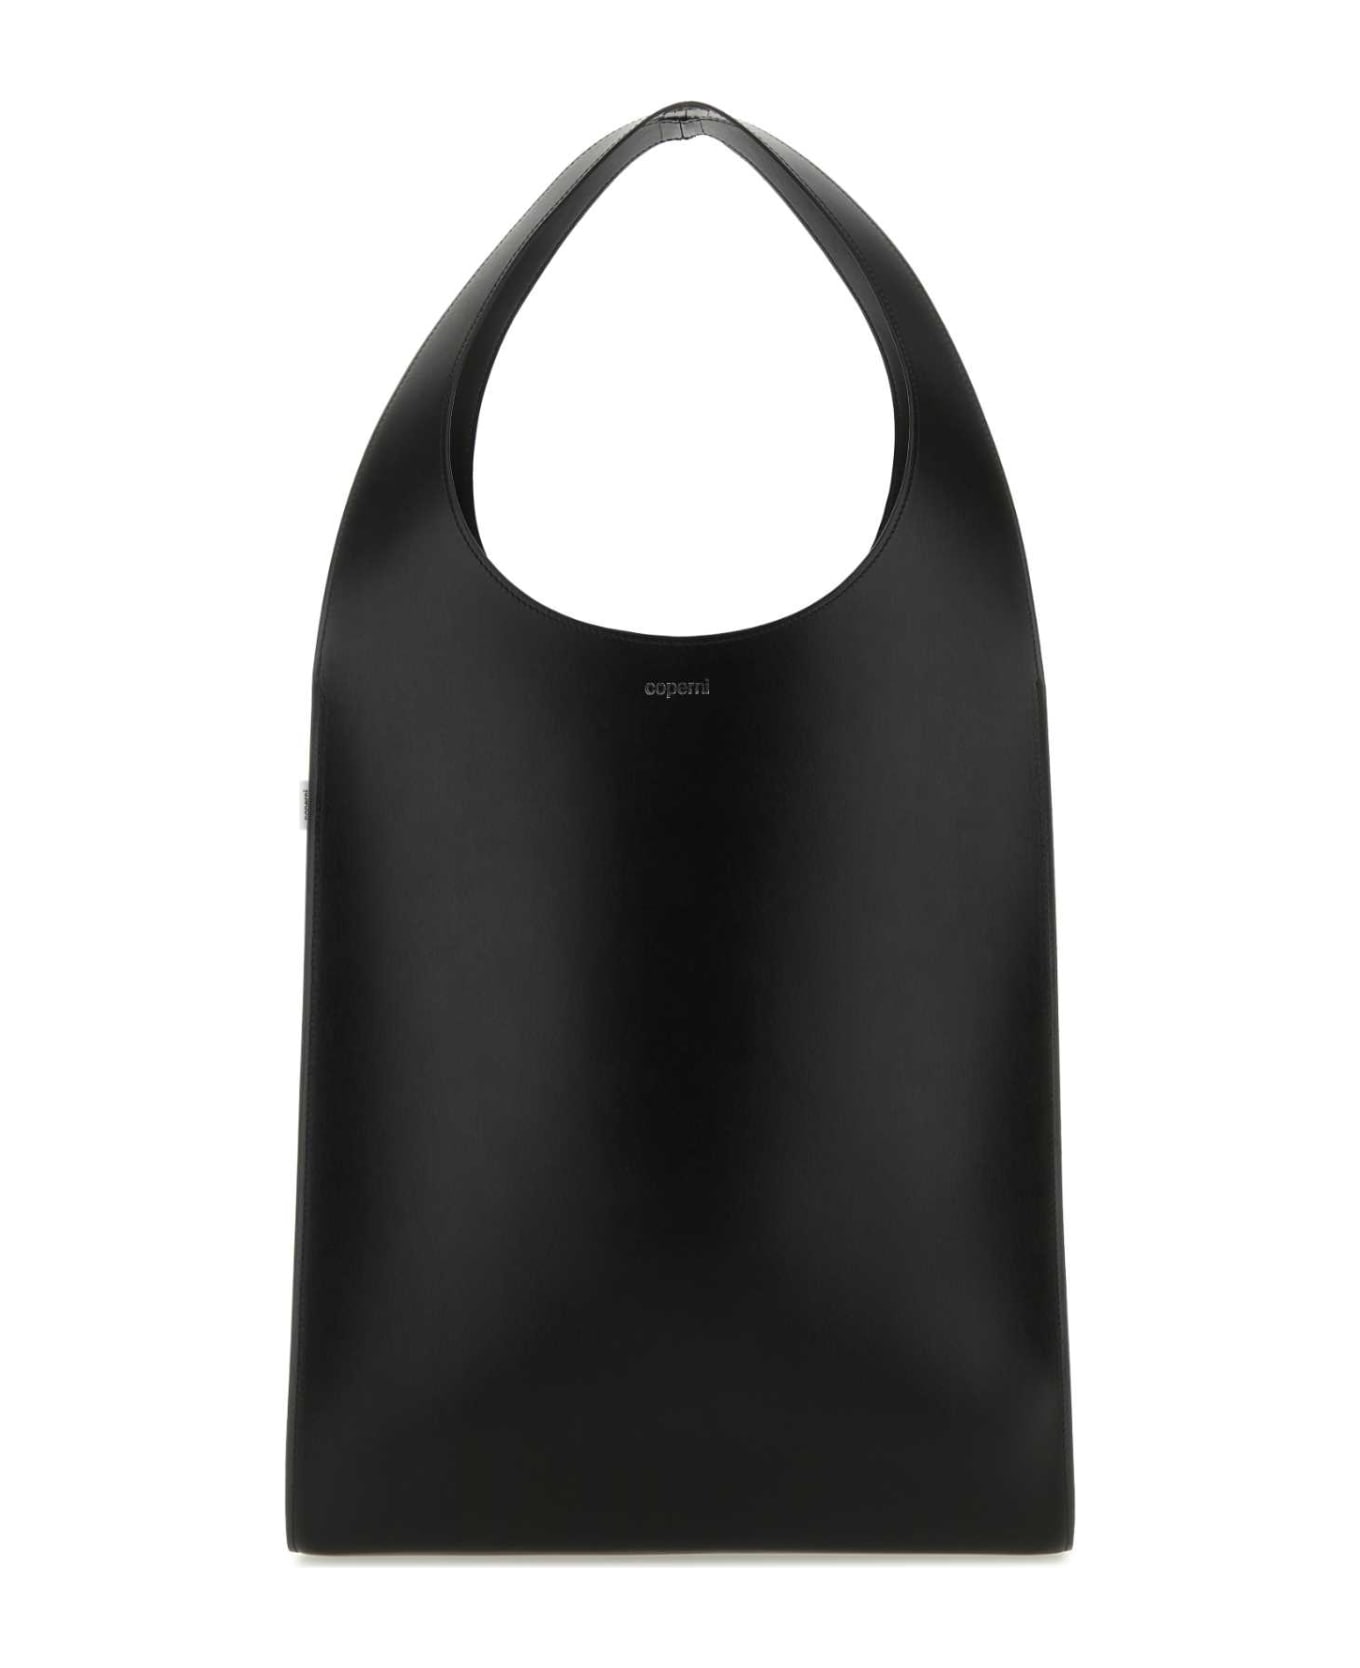 Coperni Black Leather Swipe Shopping Bag - BLACK